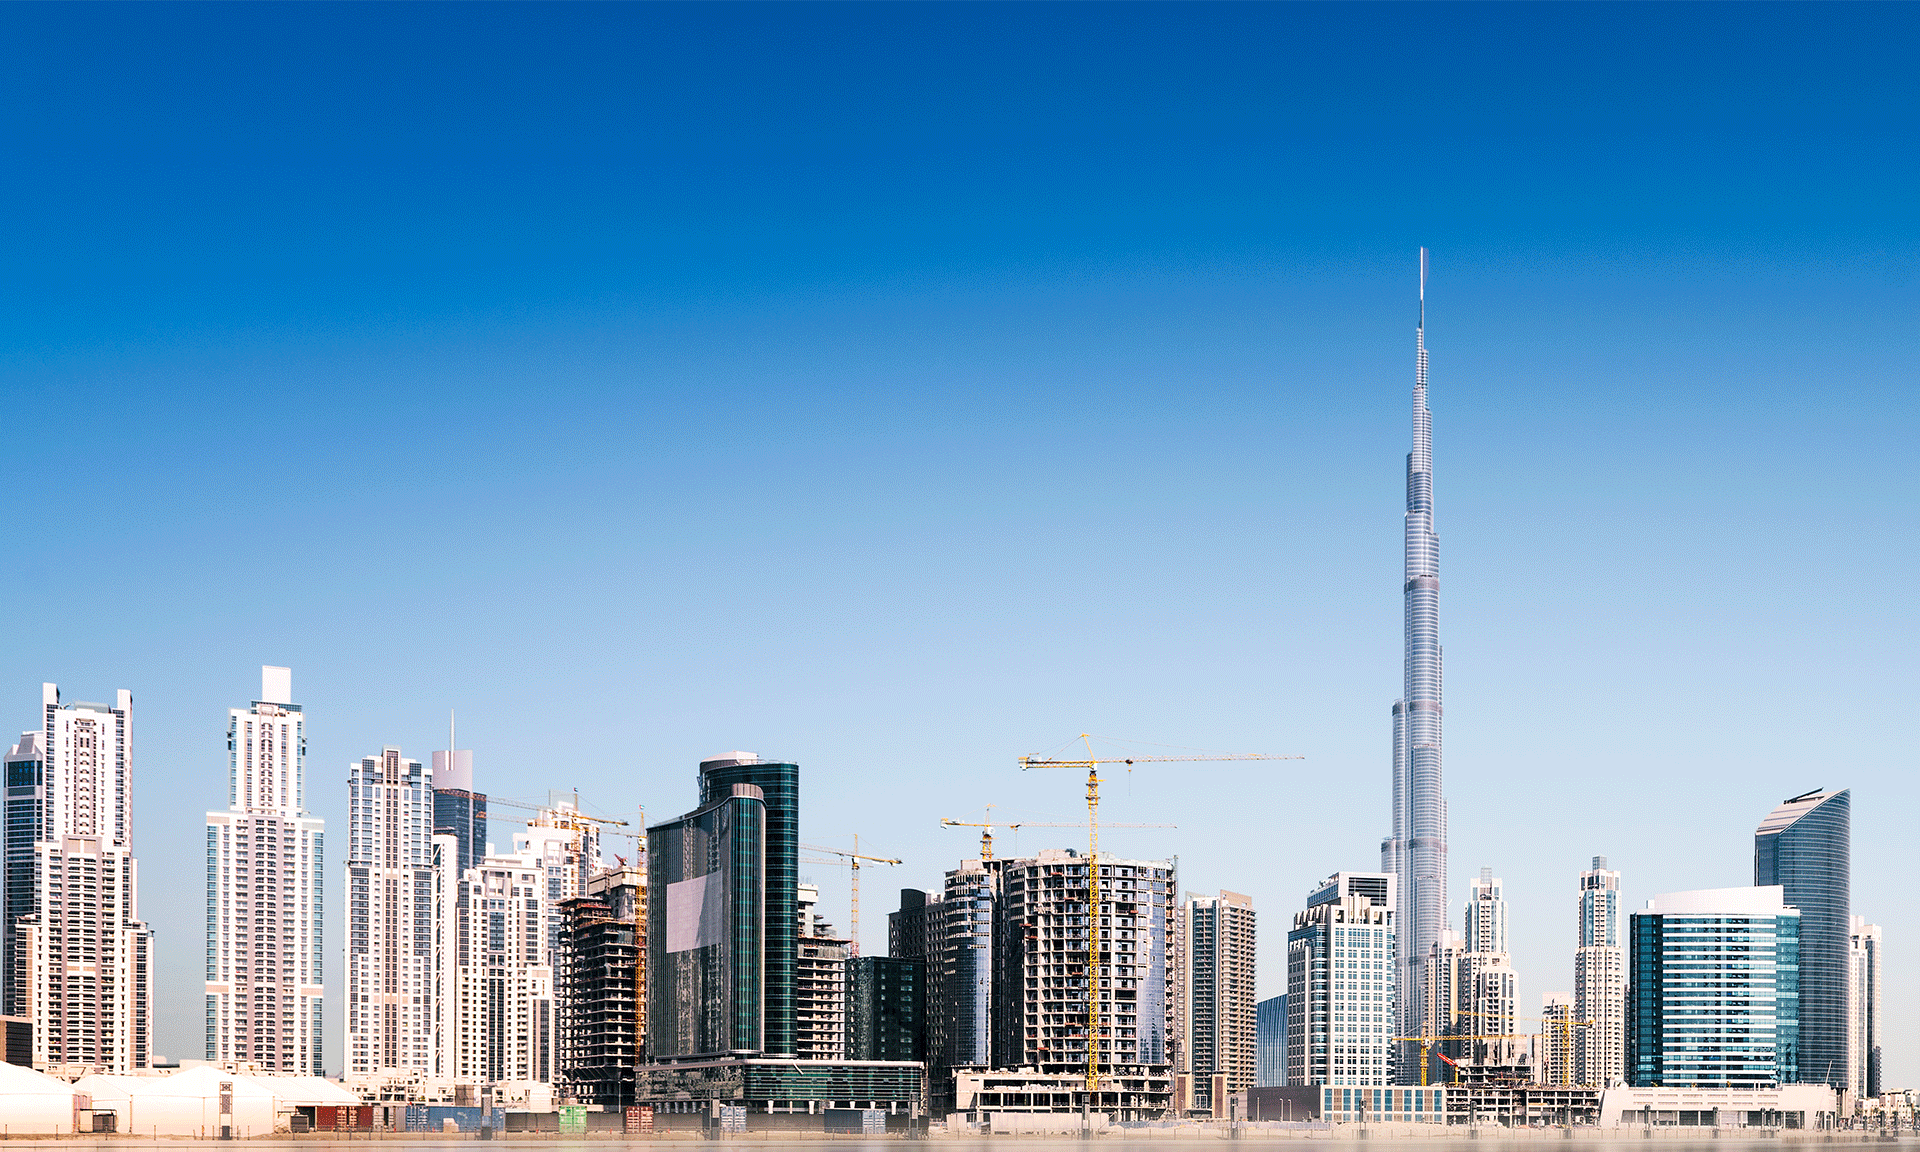 Dubai UAE Witnesses Growing FDI Inflow on The Back of New Visa Reforms